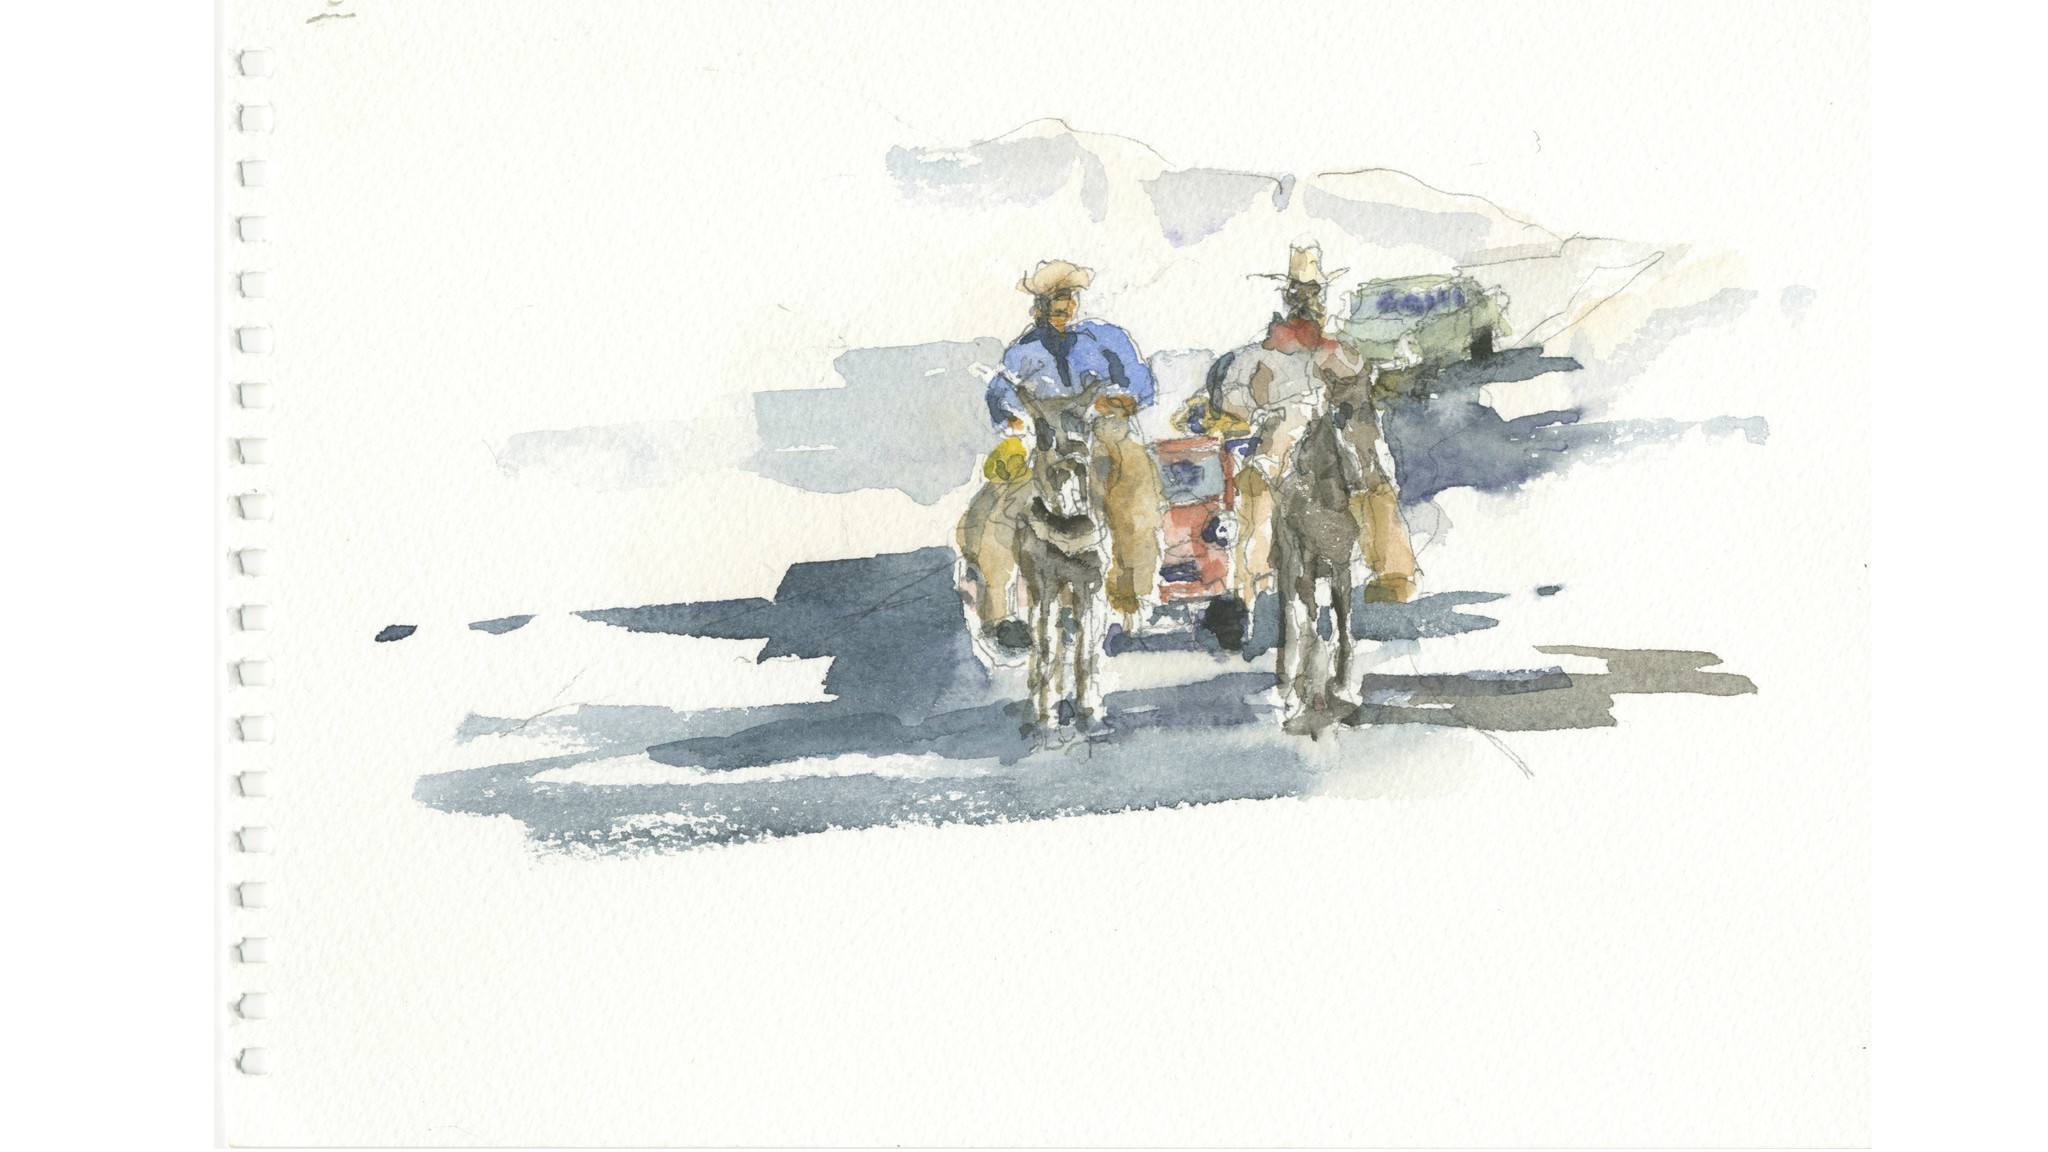 Pilgrims on horseback and in SUVs.